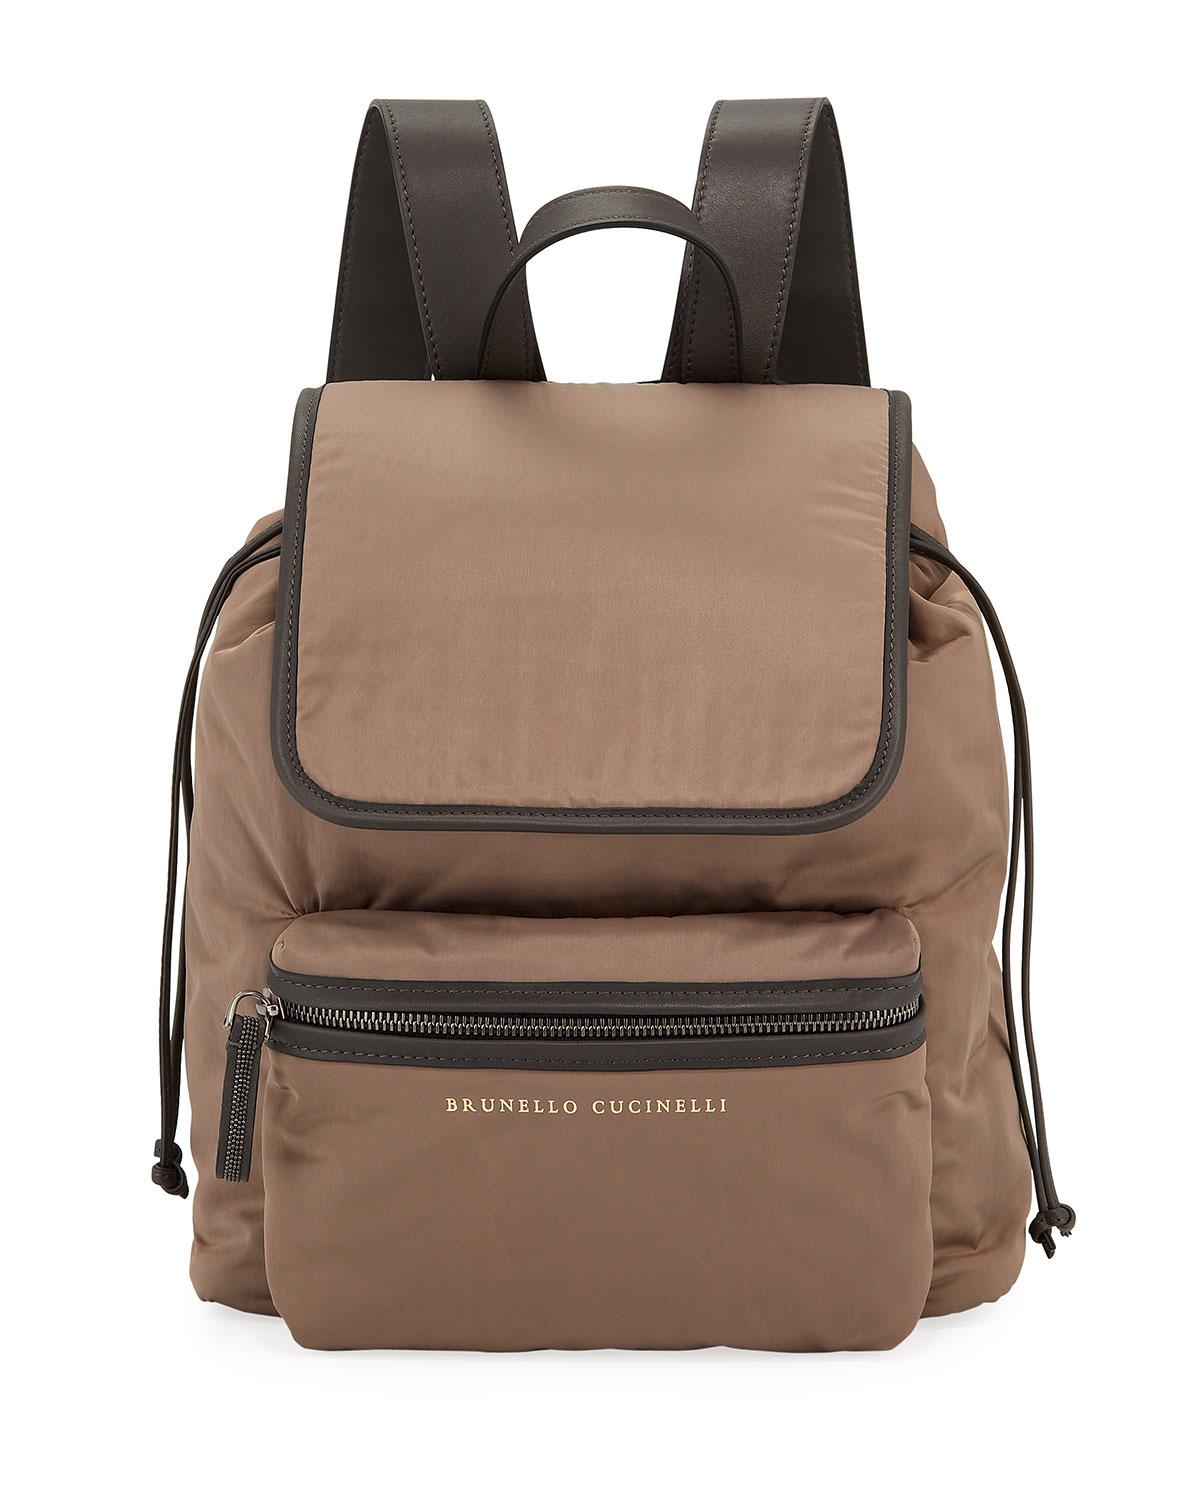 Brunello Cucinelli Techno Nylon Backpack in Brown - Lyst